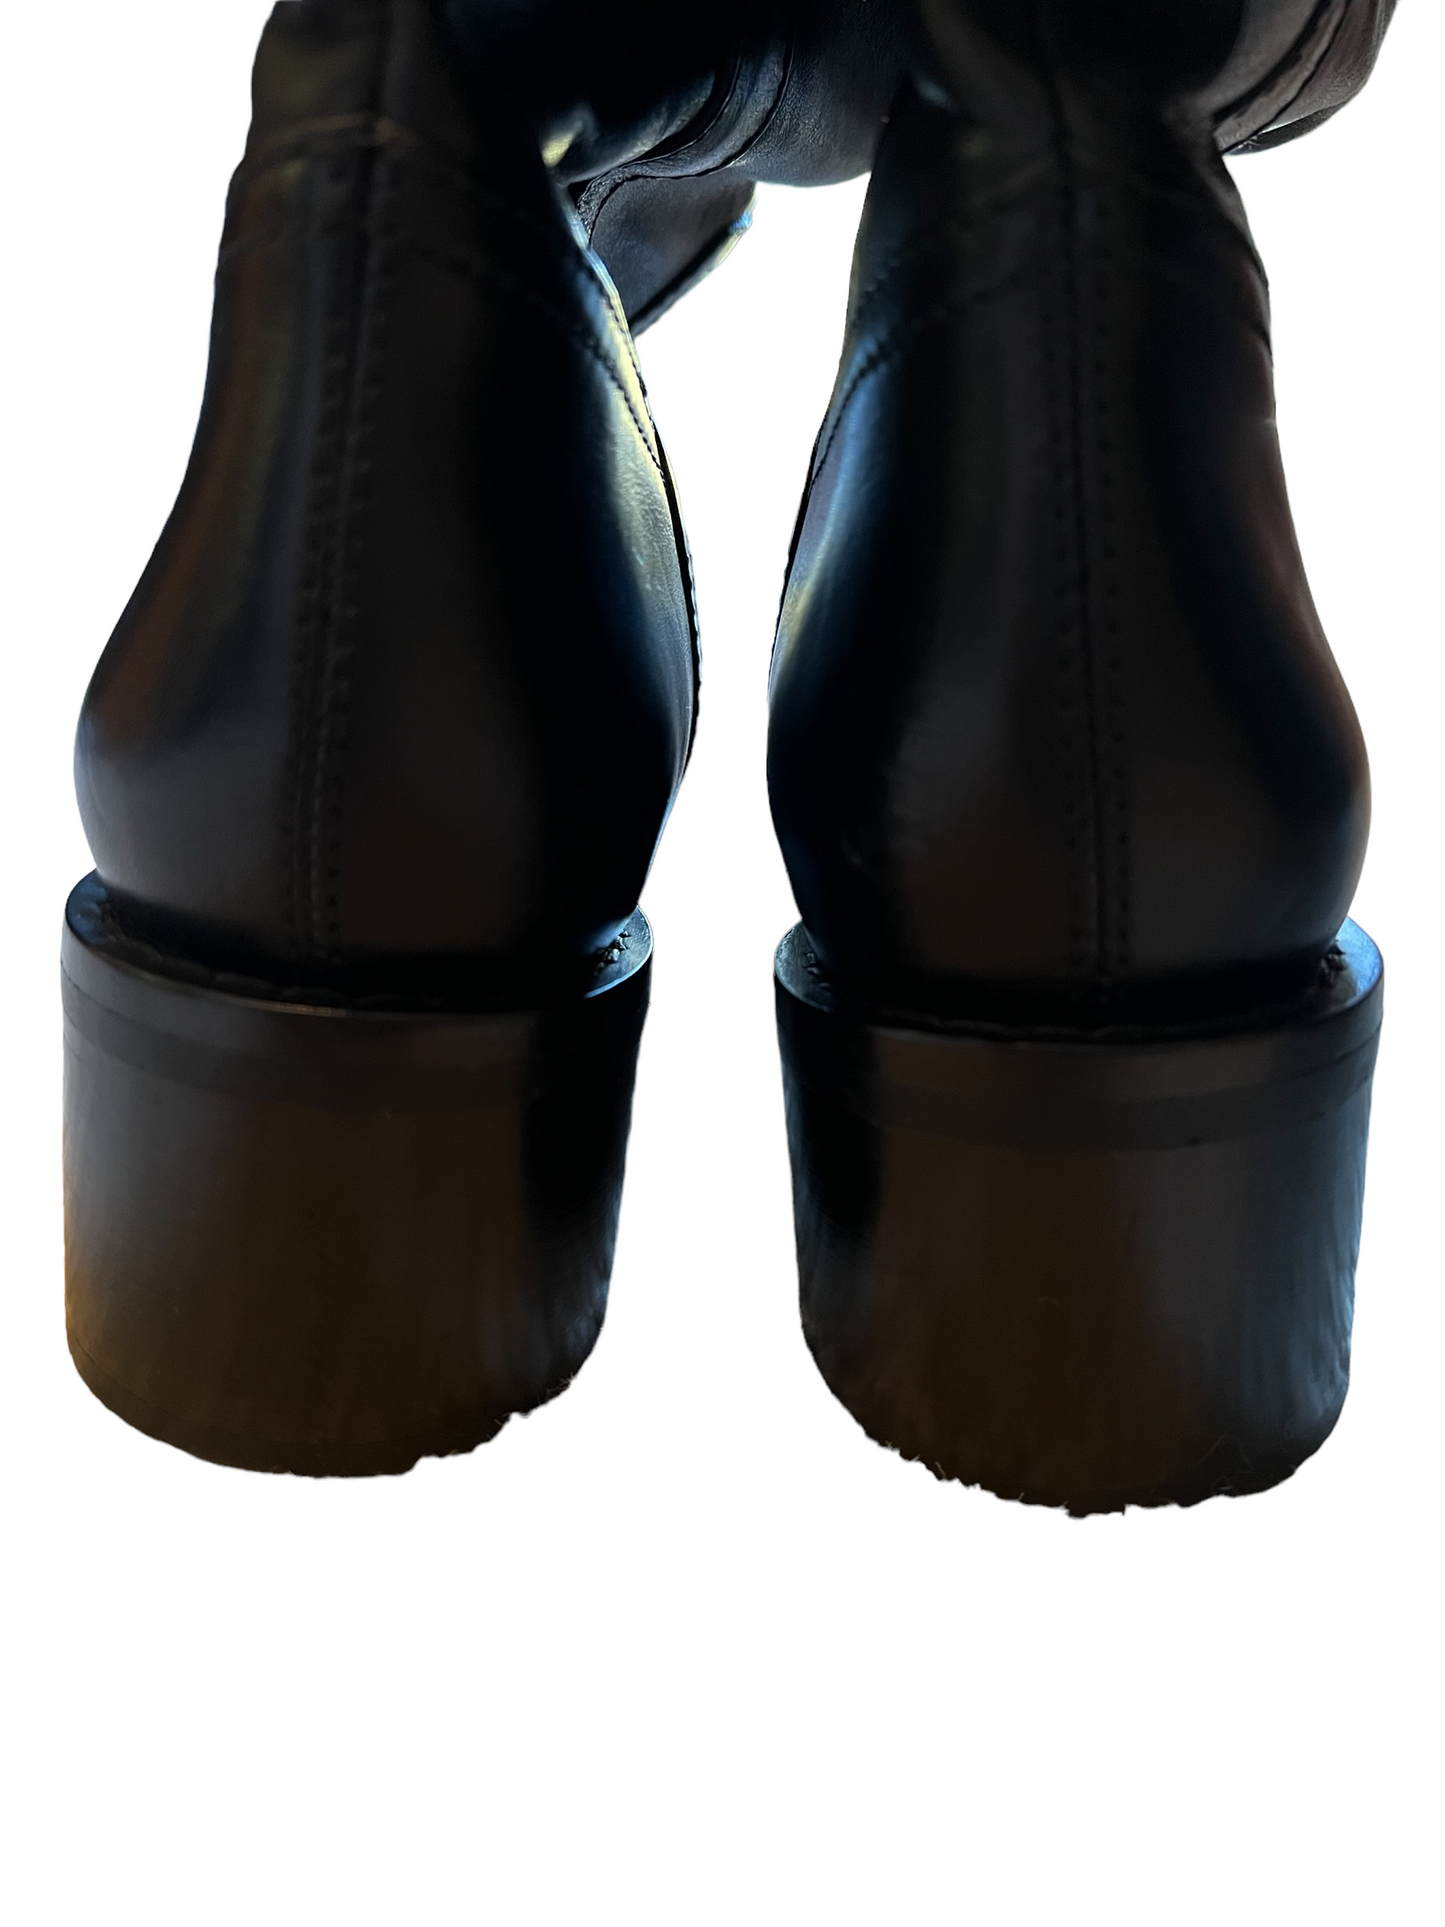 Celine Black Foldover OTK Folco Shearling Size 39 Boots